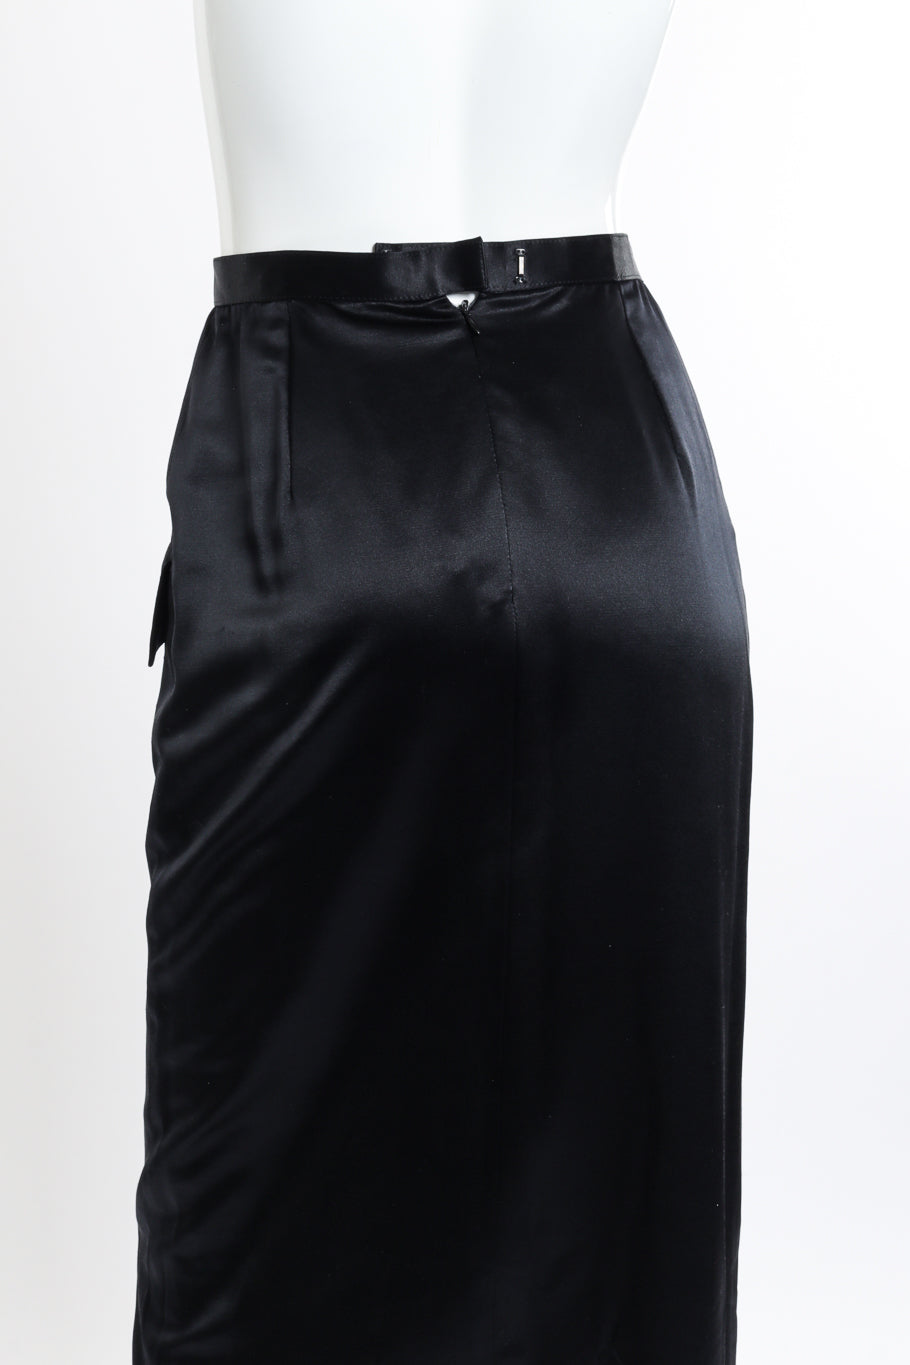 Vintage Geoffrey Beene Peplum Vest and Maxi Skirt Set skirt back on mannequin closeup @recessla